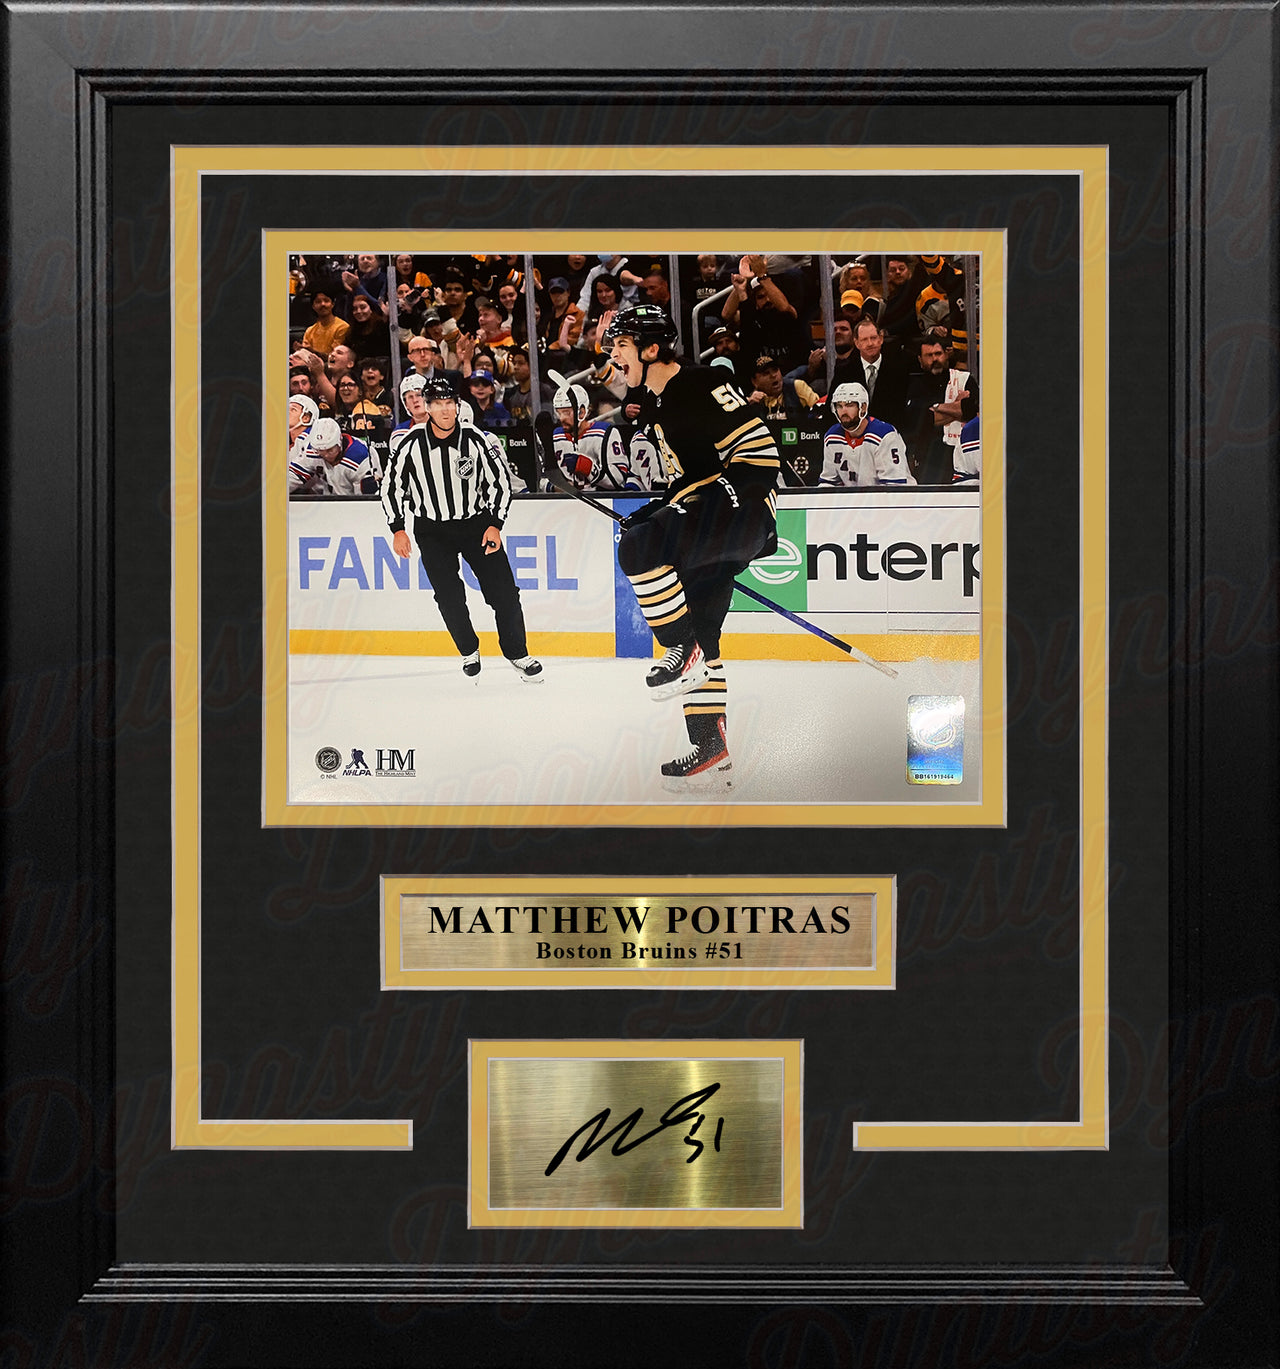 Matthew Poitras Celebration Boston Bruins 8" x 10" Framed Hockey Photo with Engraved Autograph